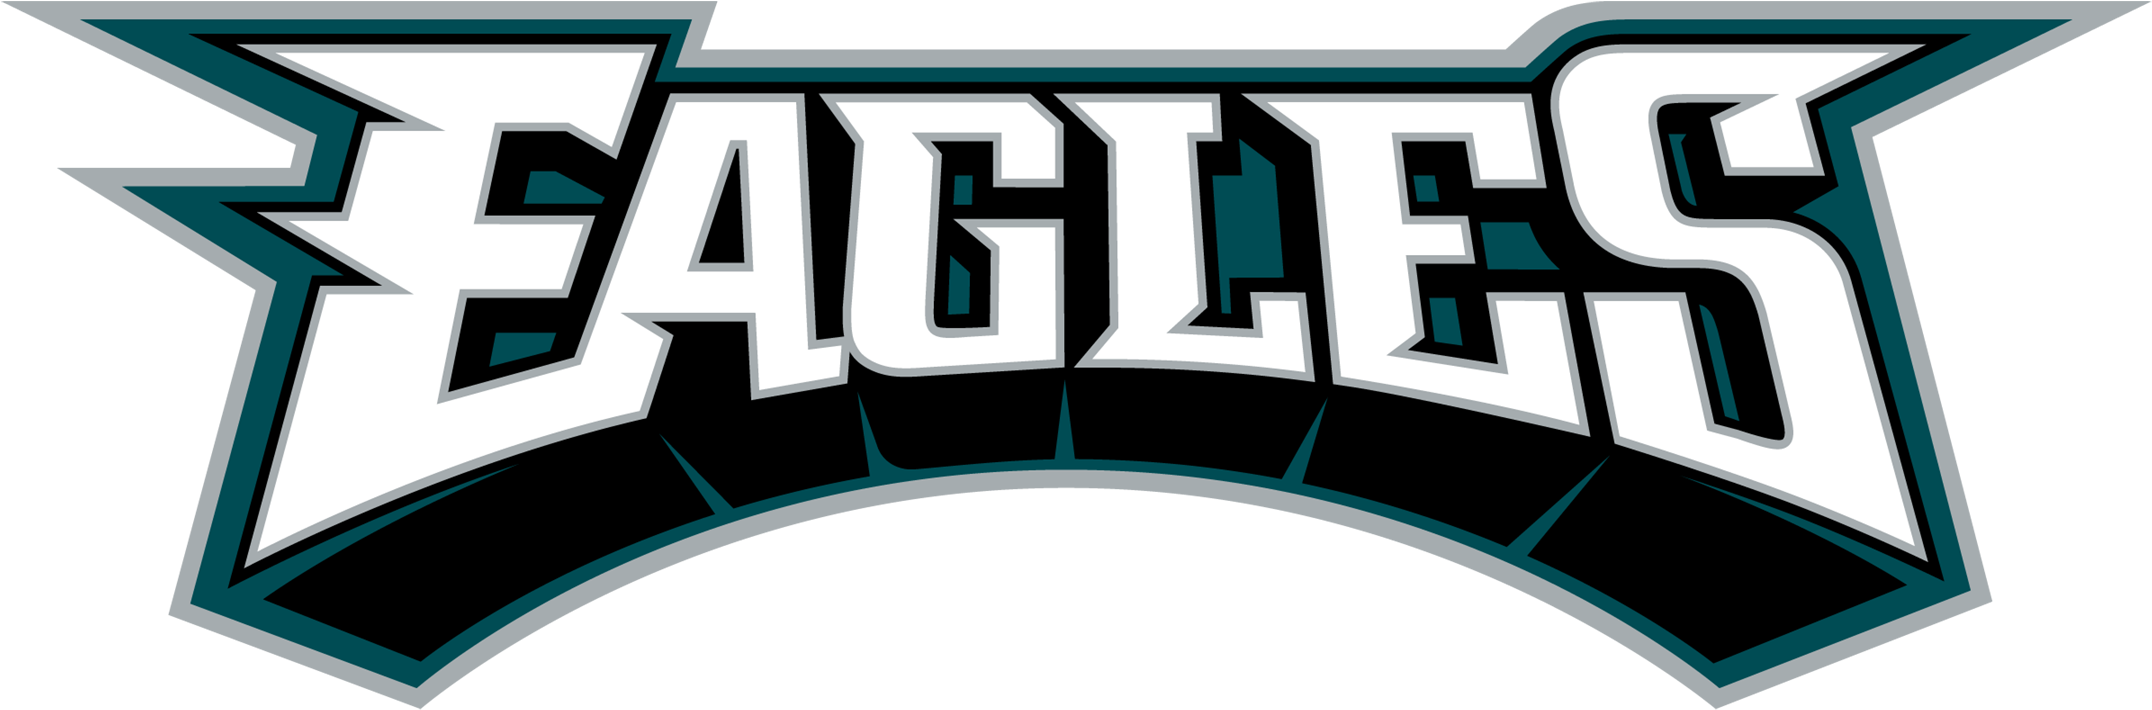 Philadelphia Eagles Logo Font - Philadelphia Eagles Decal Large (2400x990)